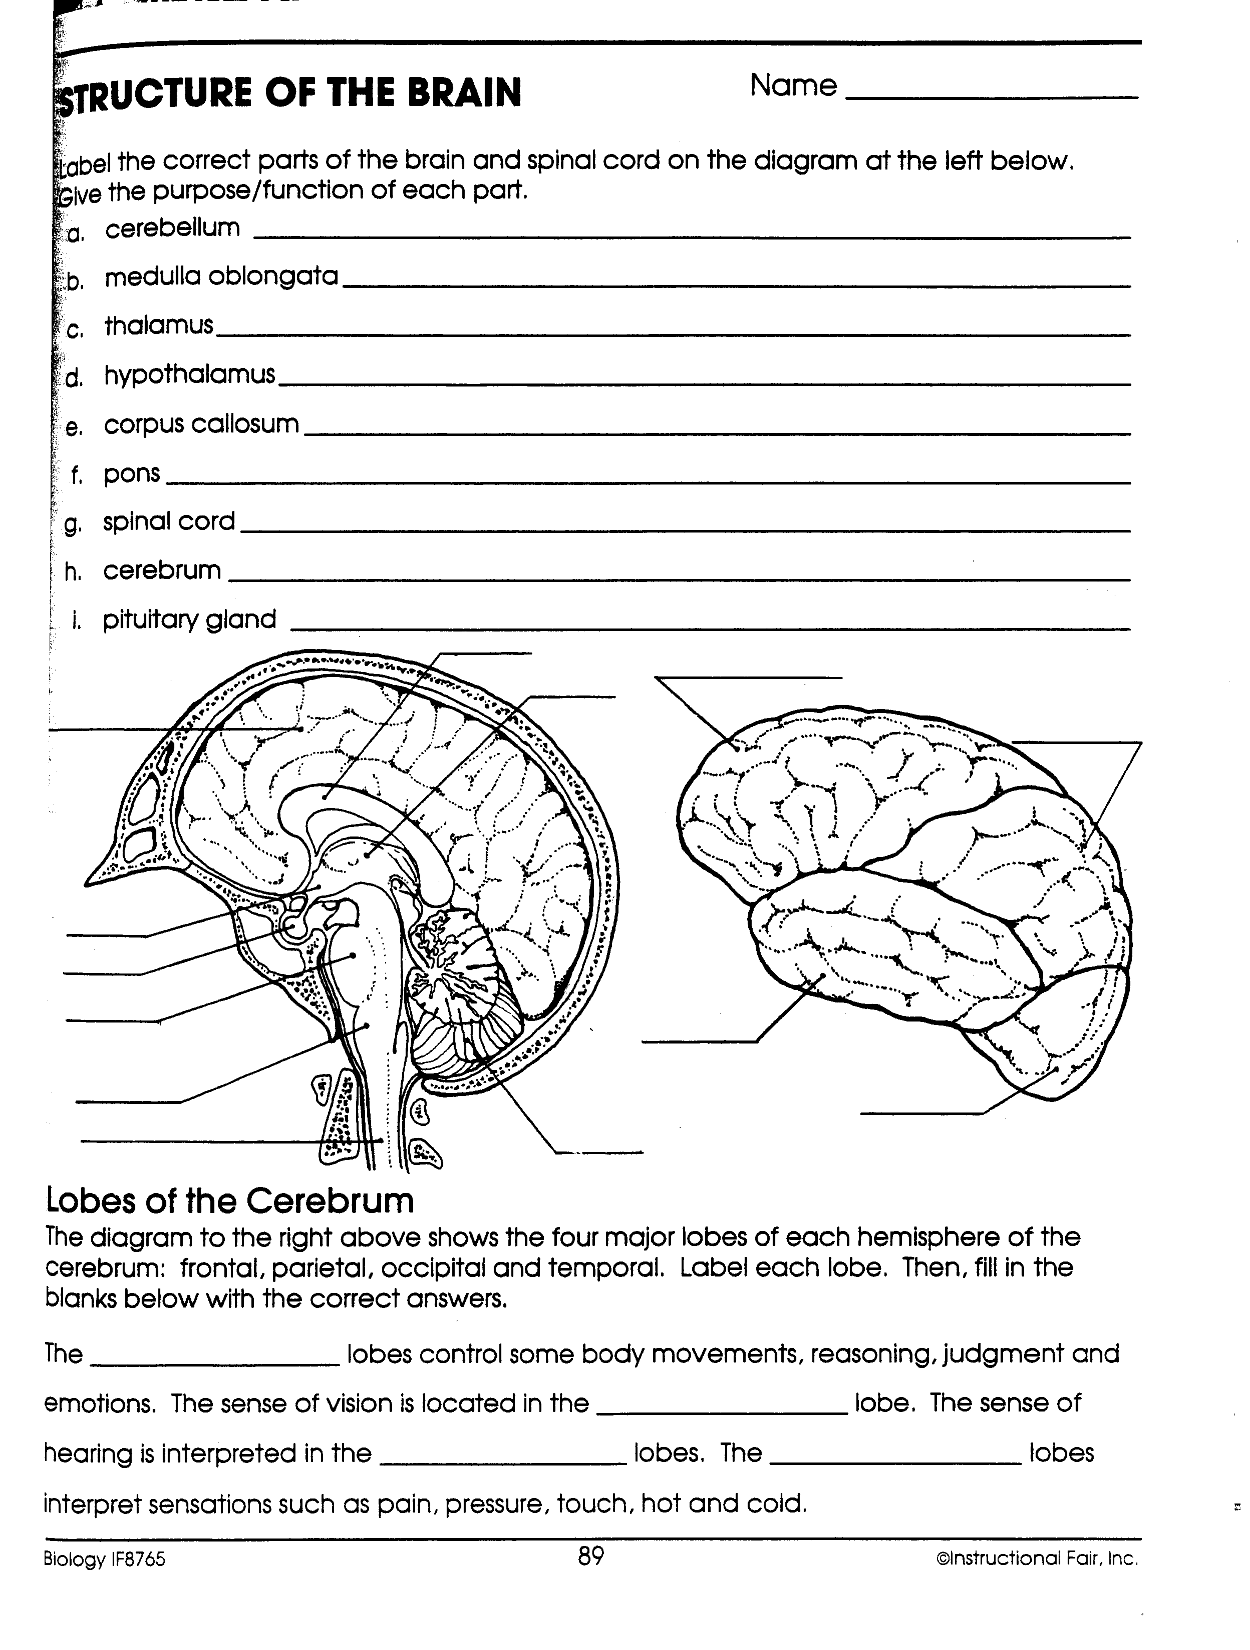 Brain tasks. Brain Worksheet. Capabilities of Human Brain Worksheets. Brain structure and function. Human Brain Worksheets.